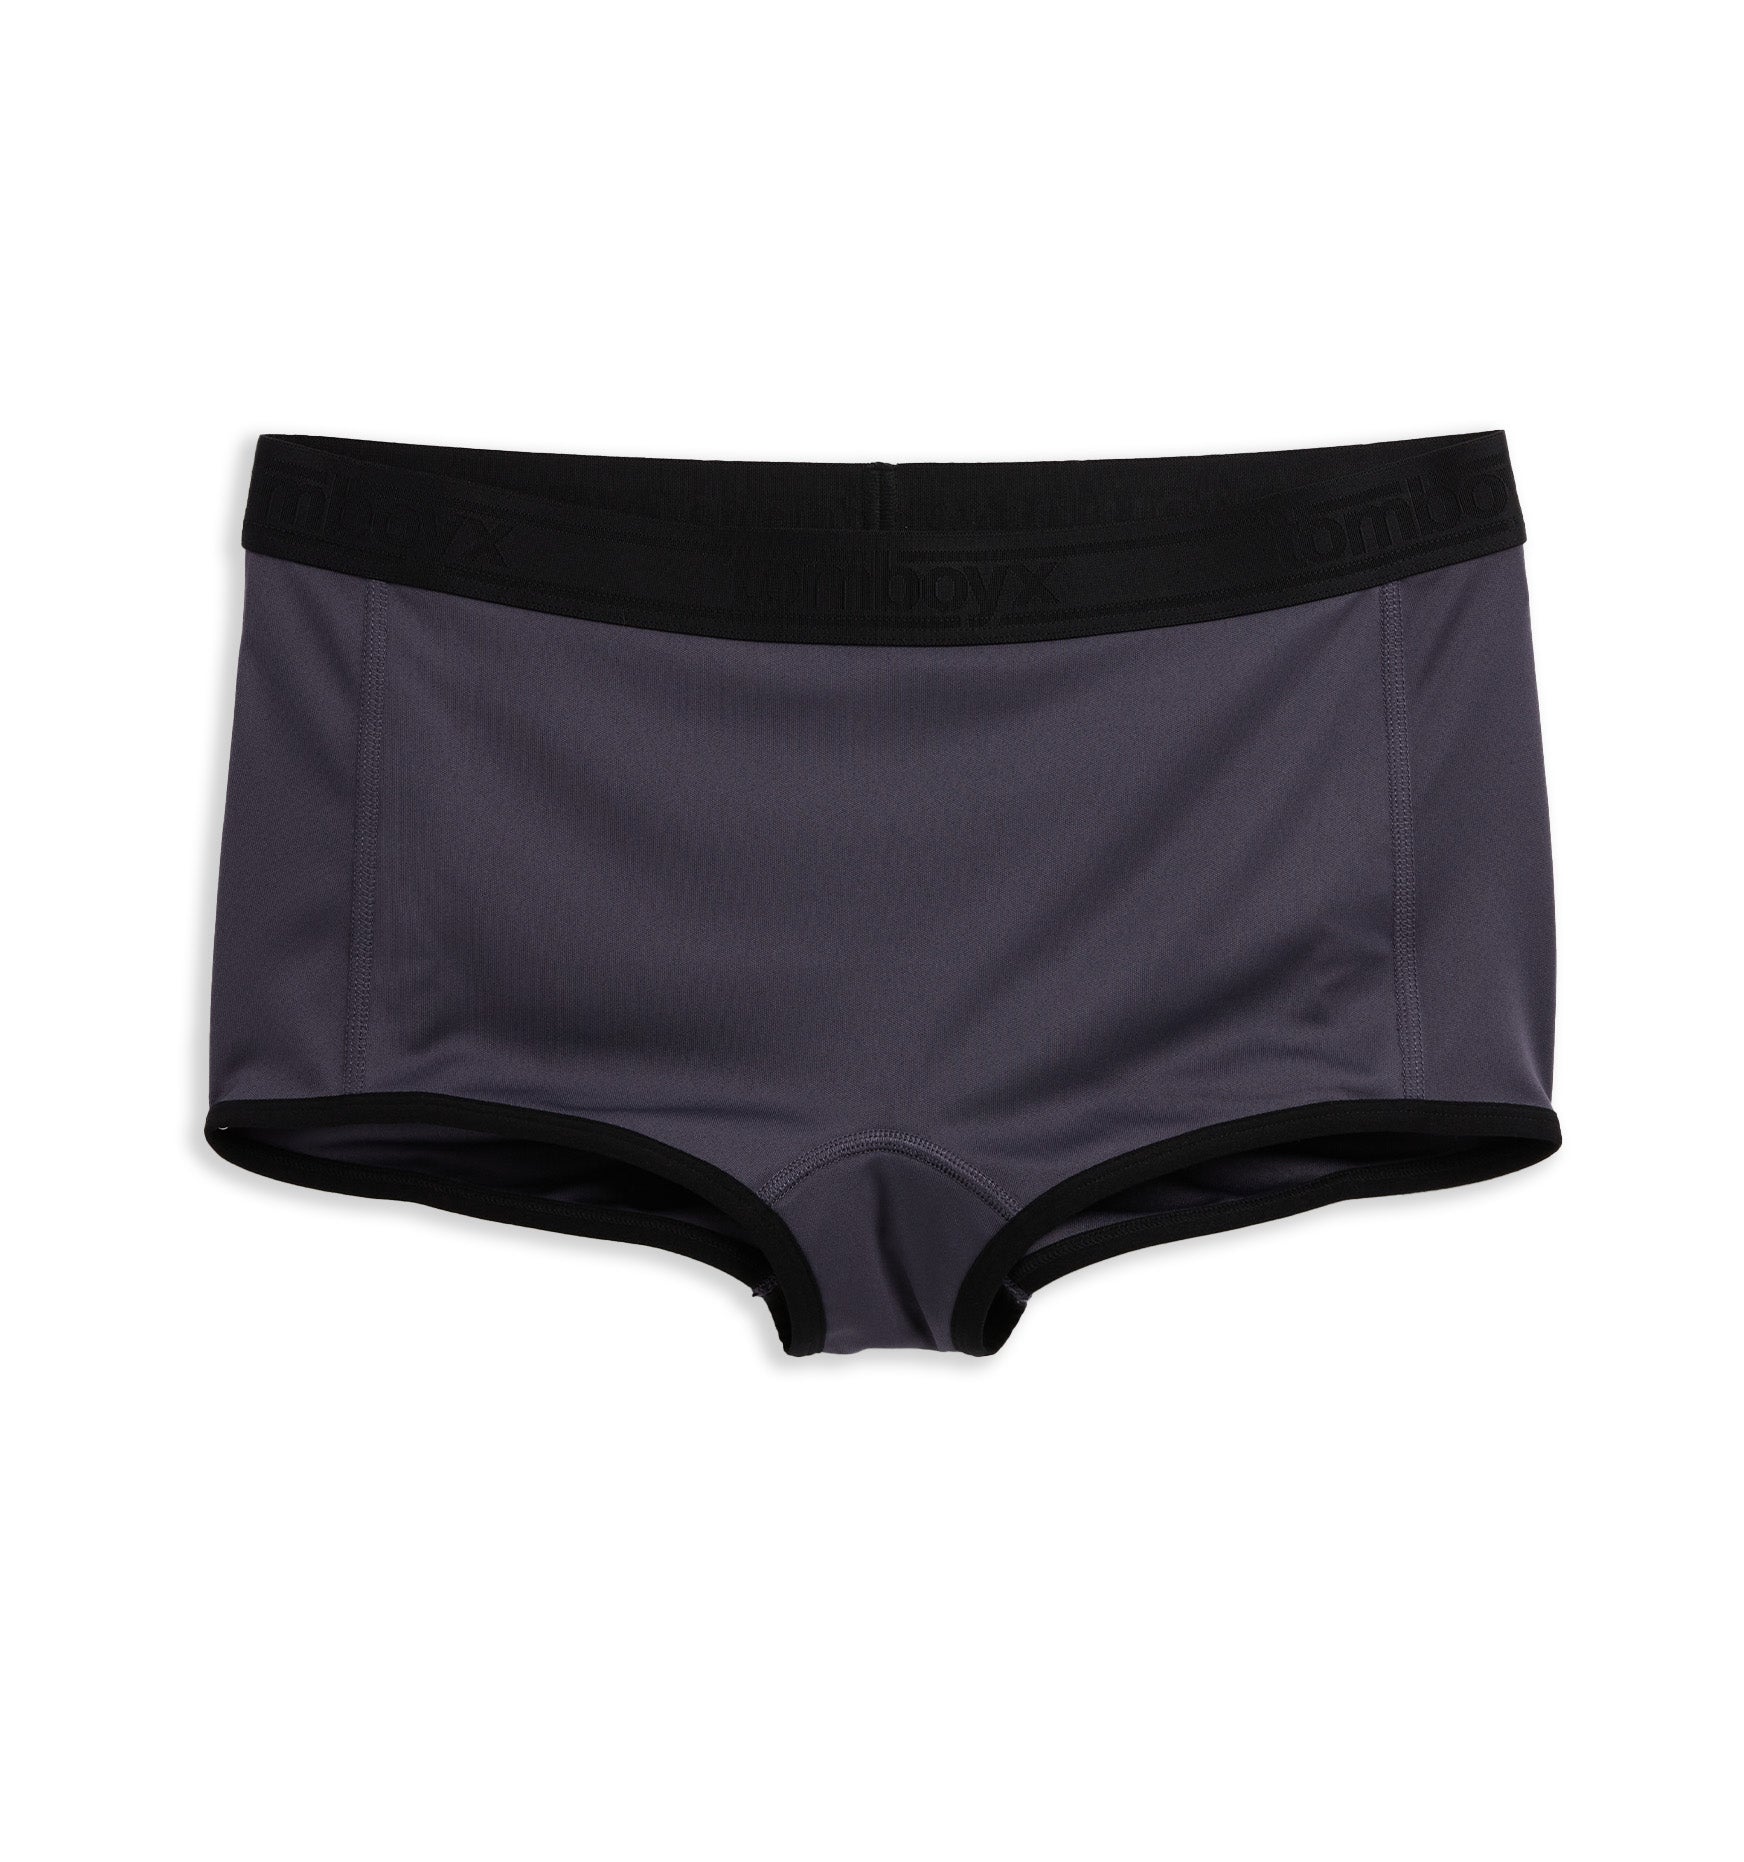 Tucking Gaff Panties For Crossdressing Men and Trans-Women, Thong-Style  Black Size XS